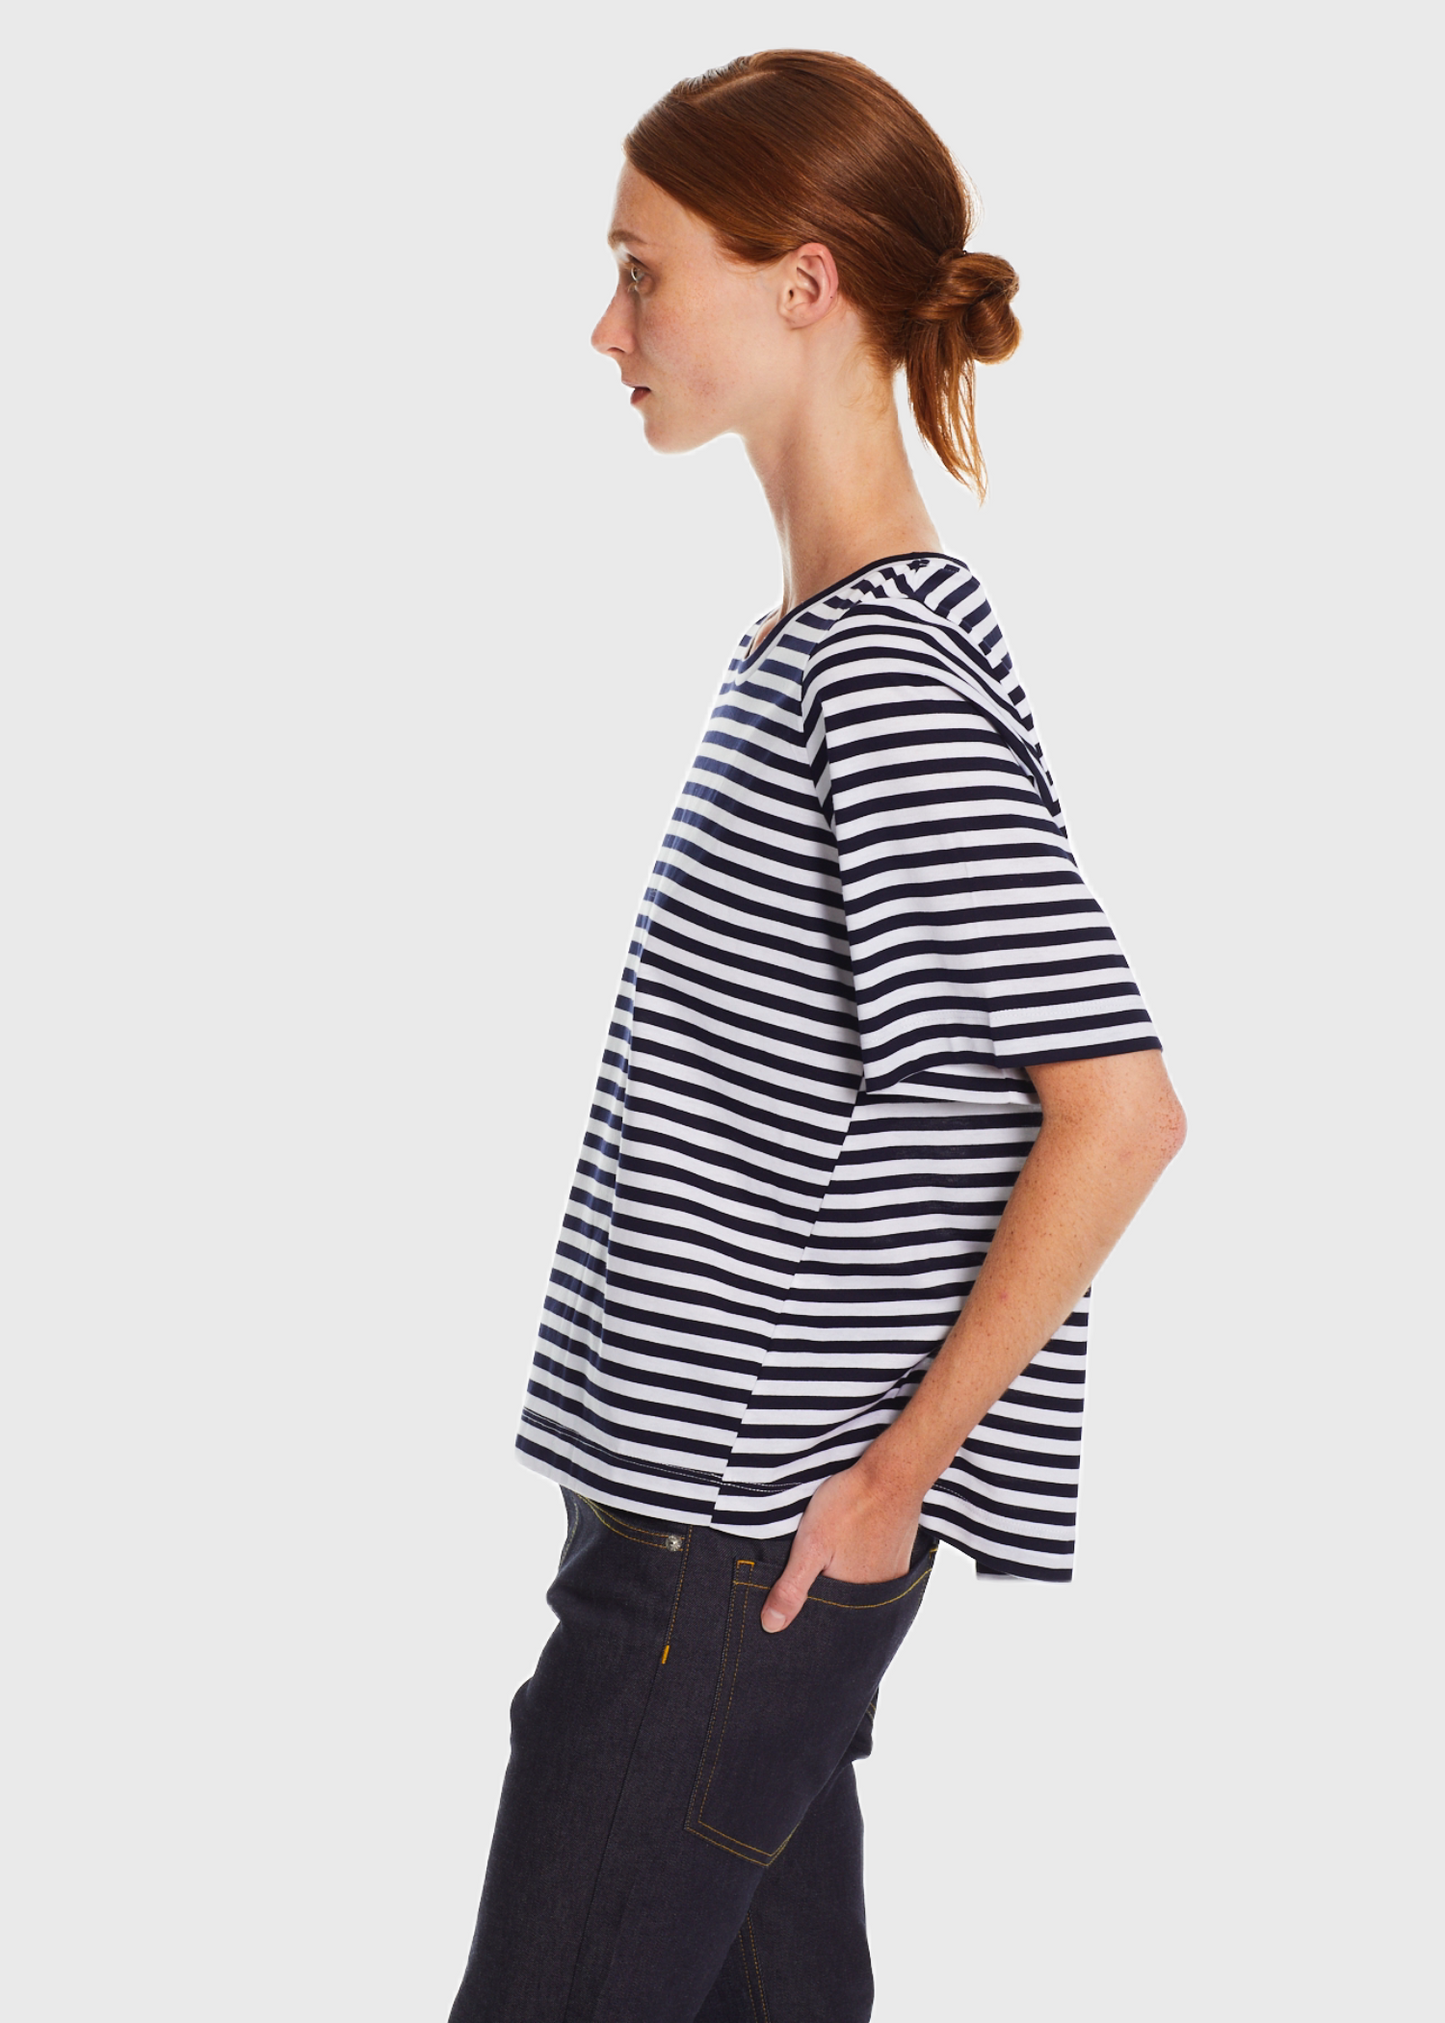 Mac, Navy/Block Stripes, T-Shirt